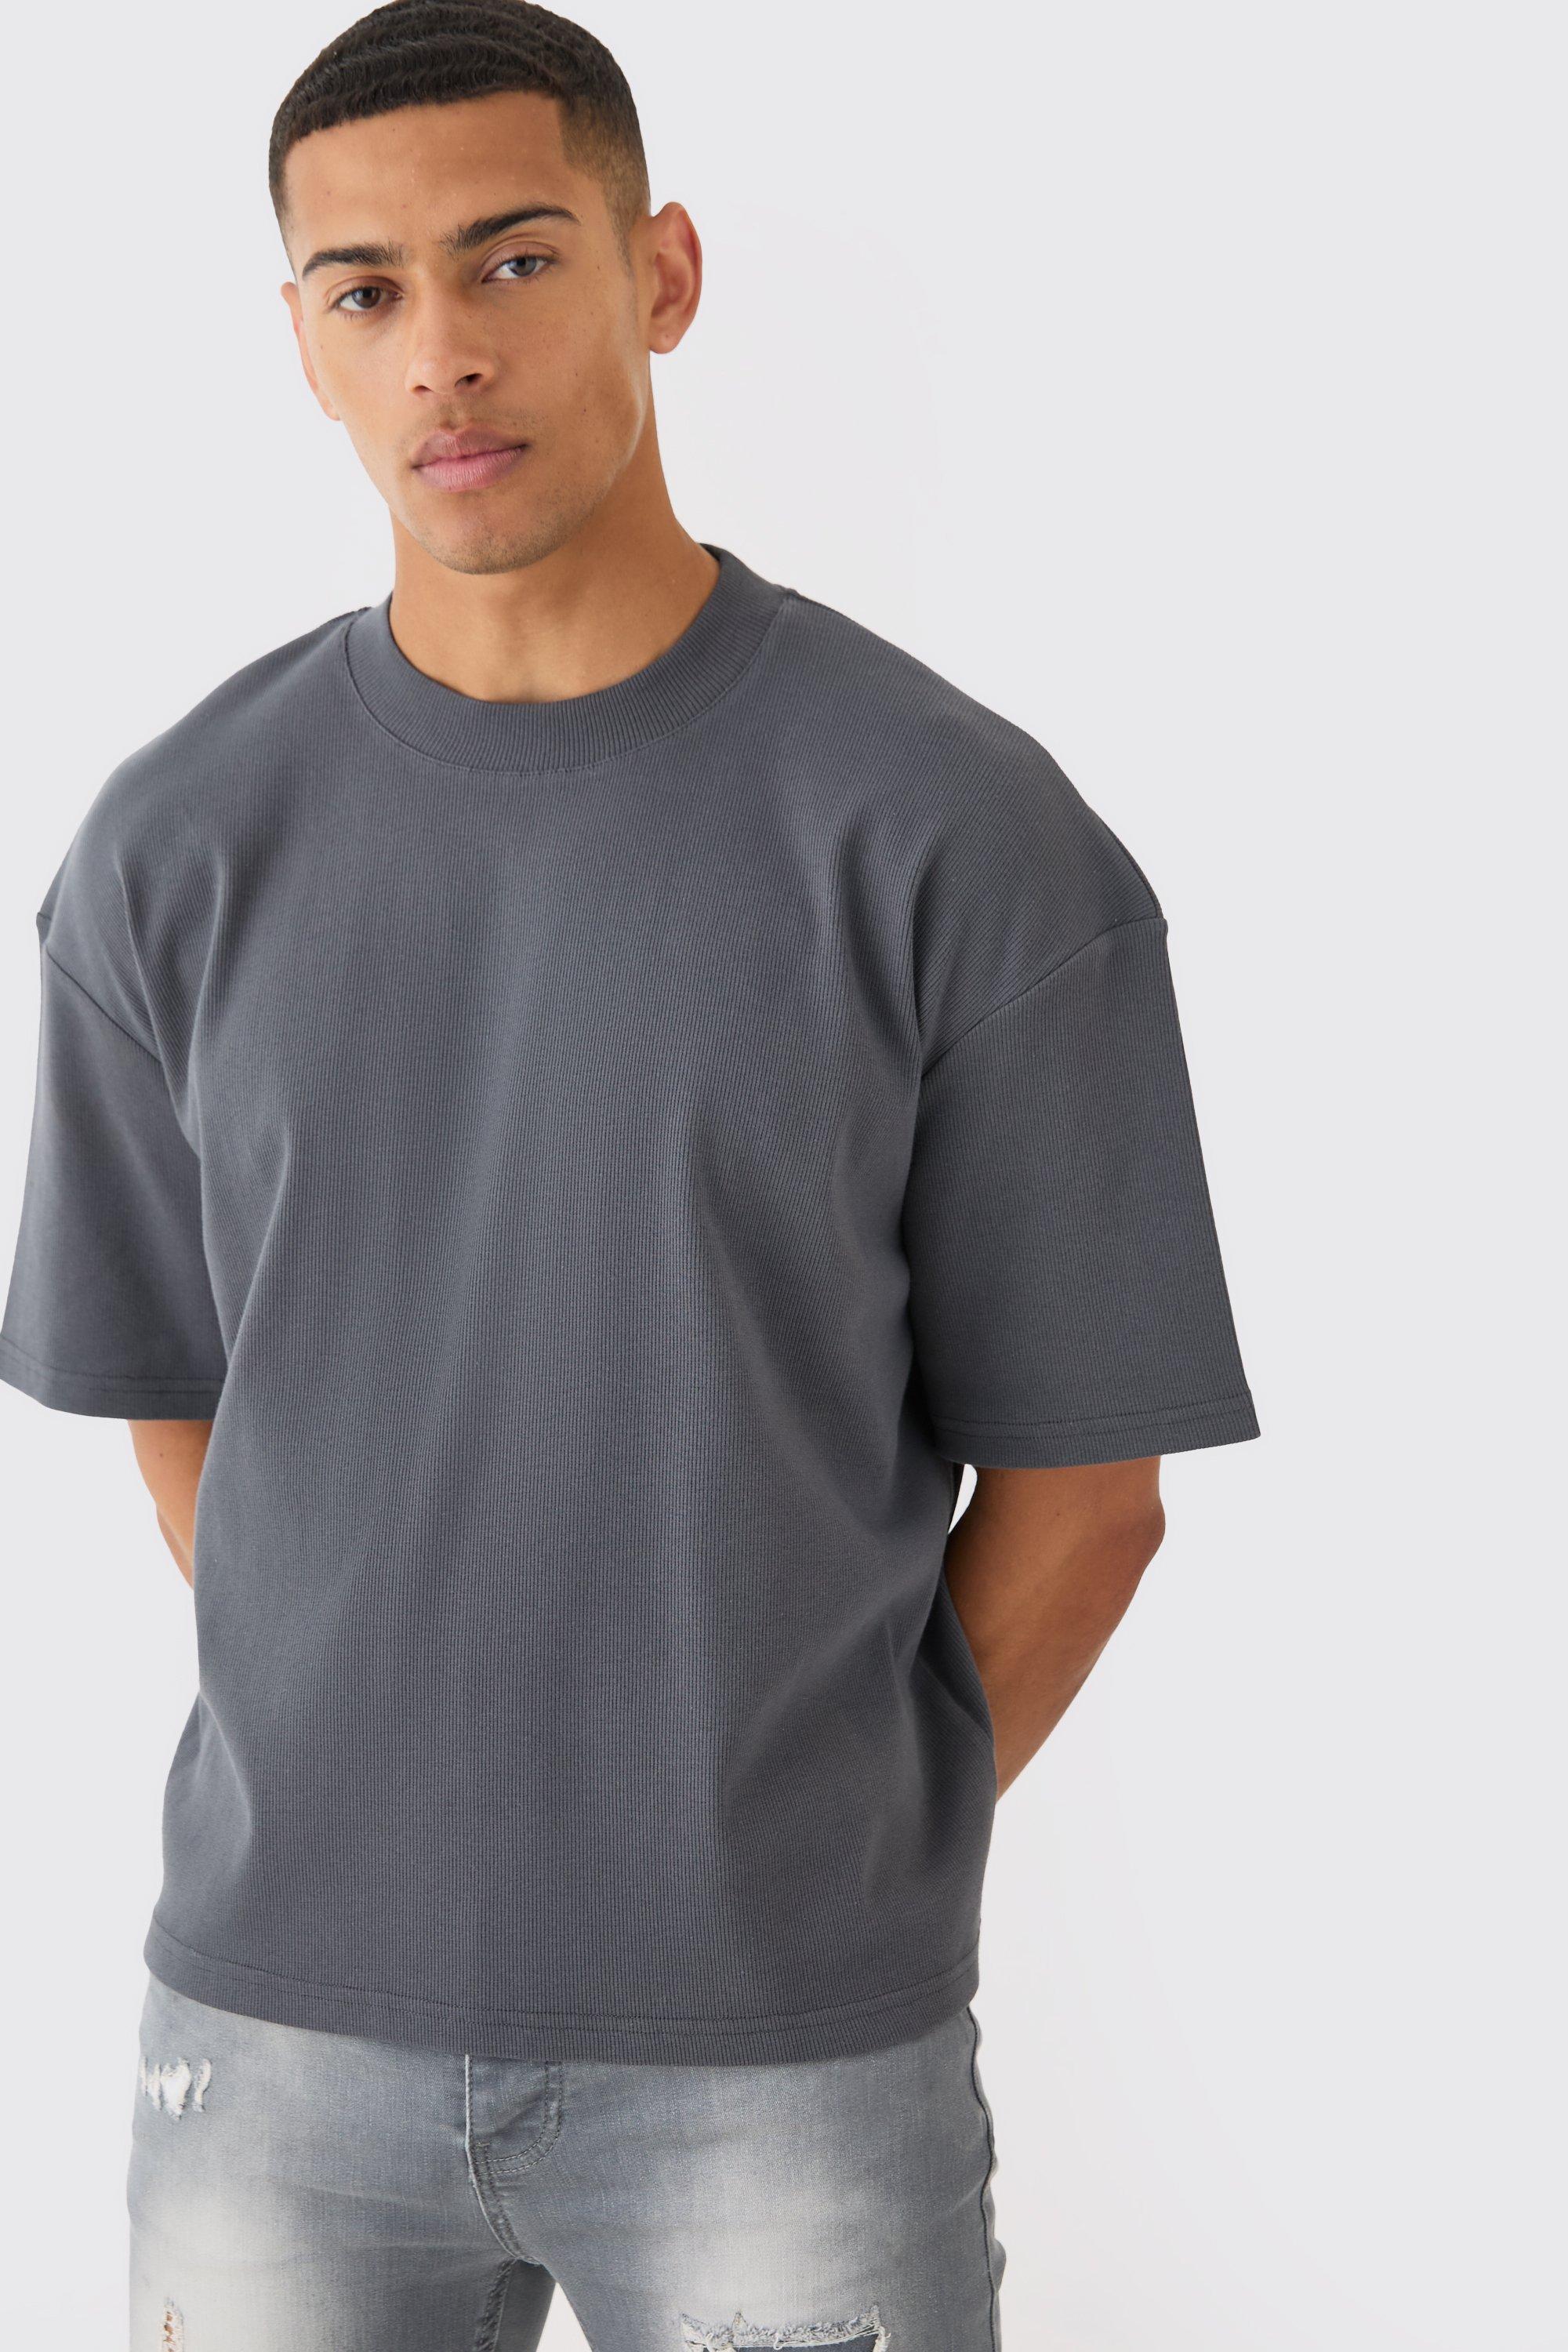 Image of Oversized Boxy Extended Neck Heavyweight Ribbed T-shirt, Grigio